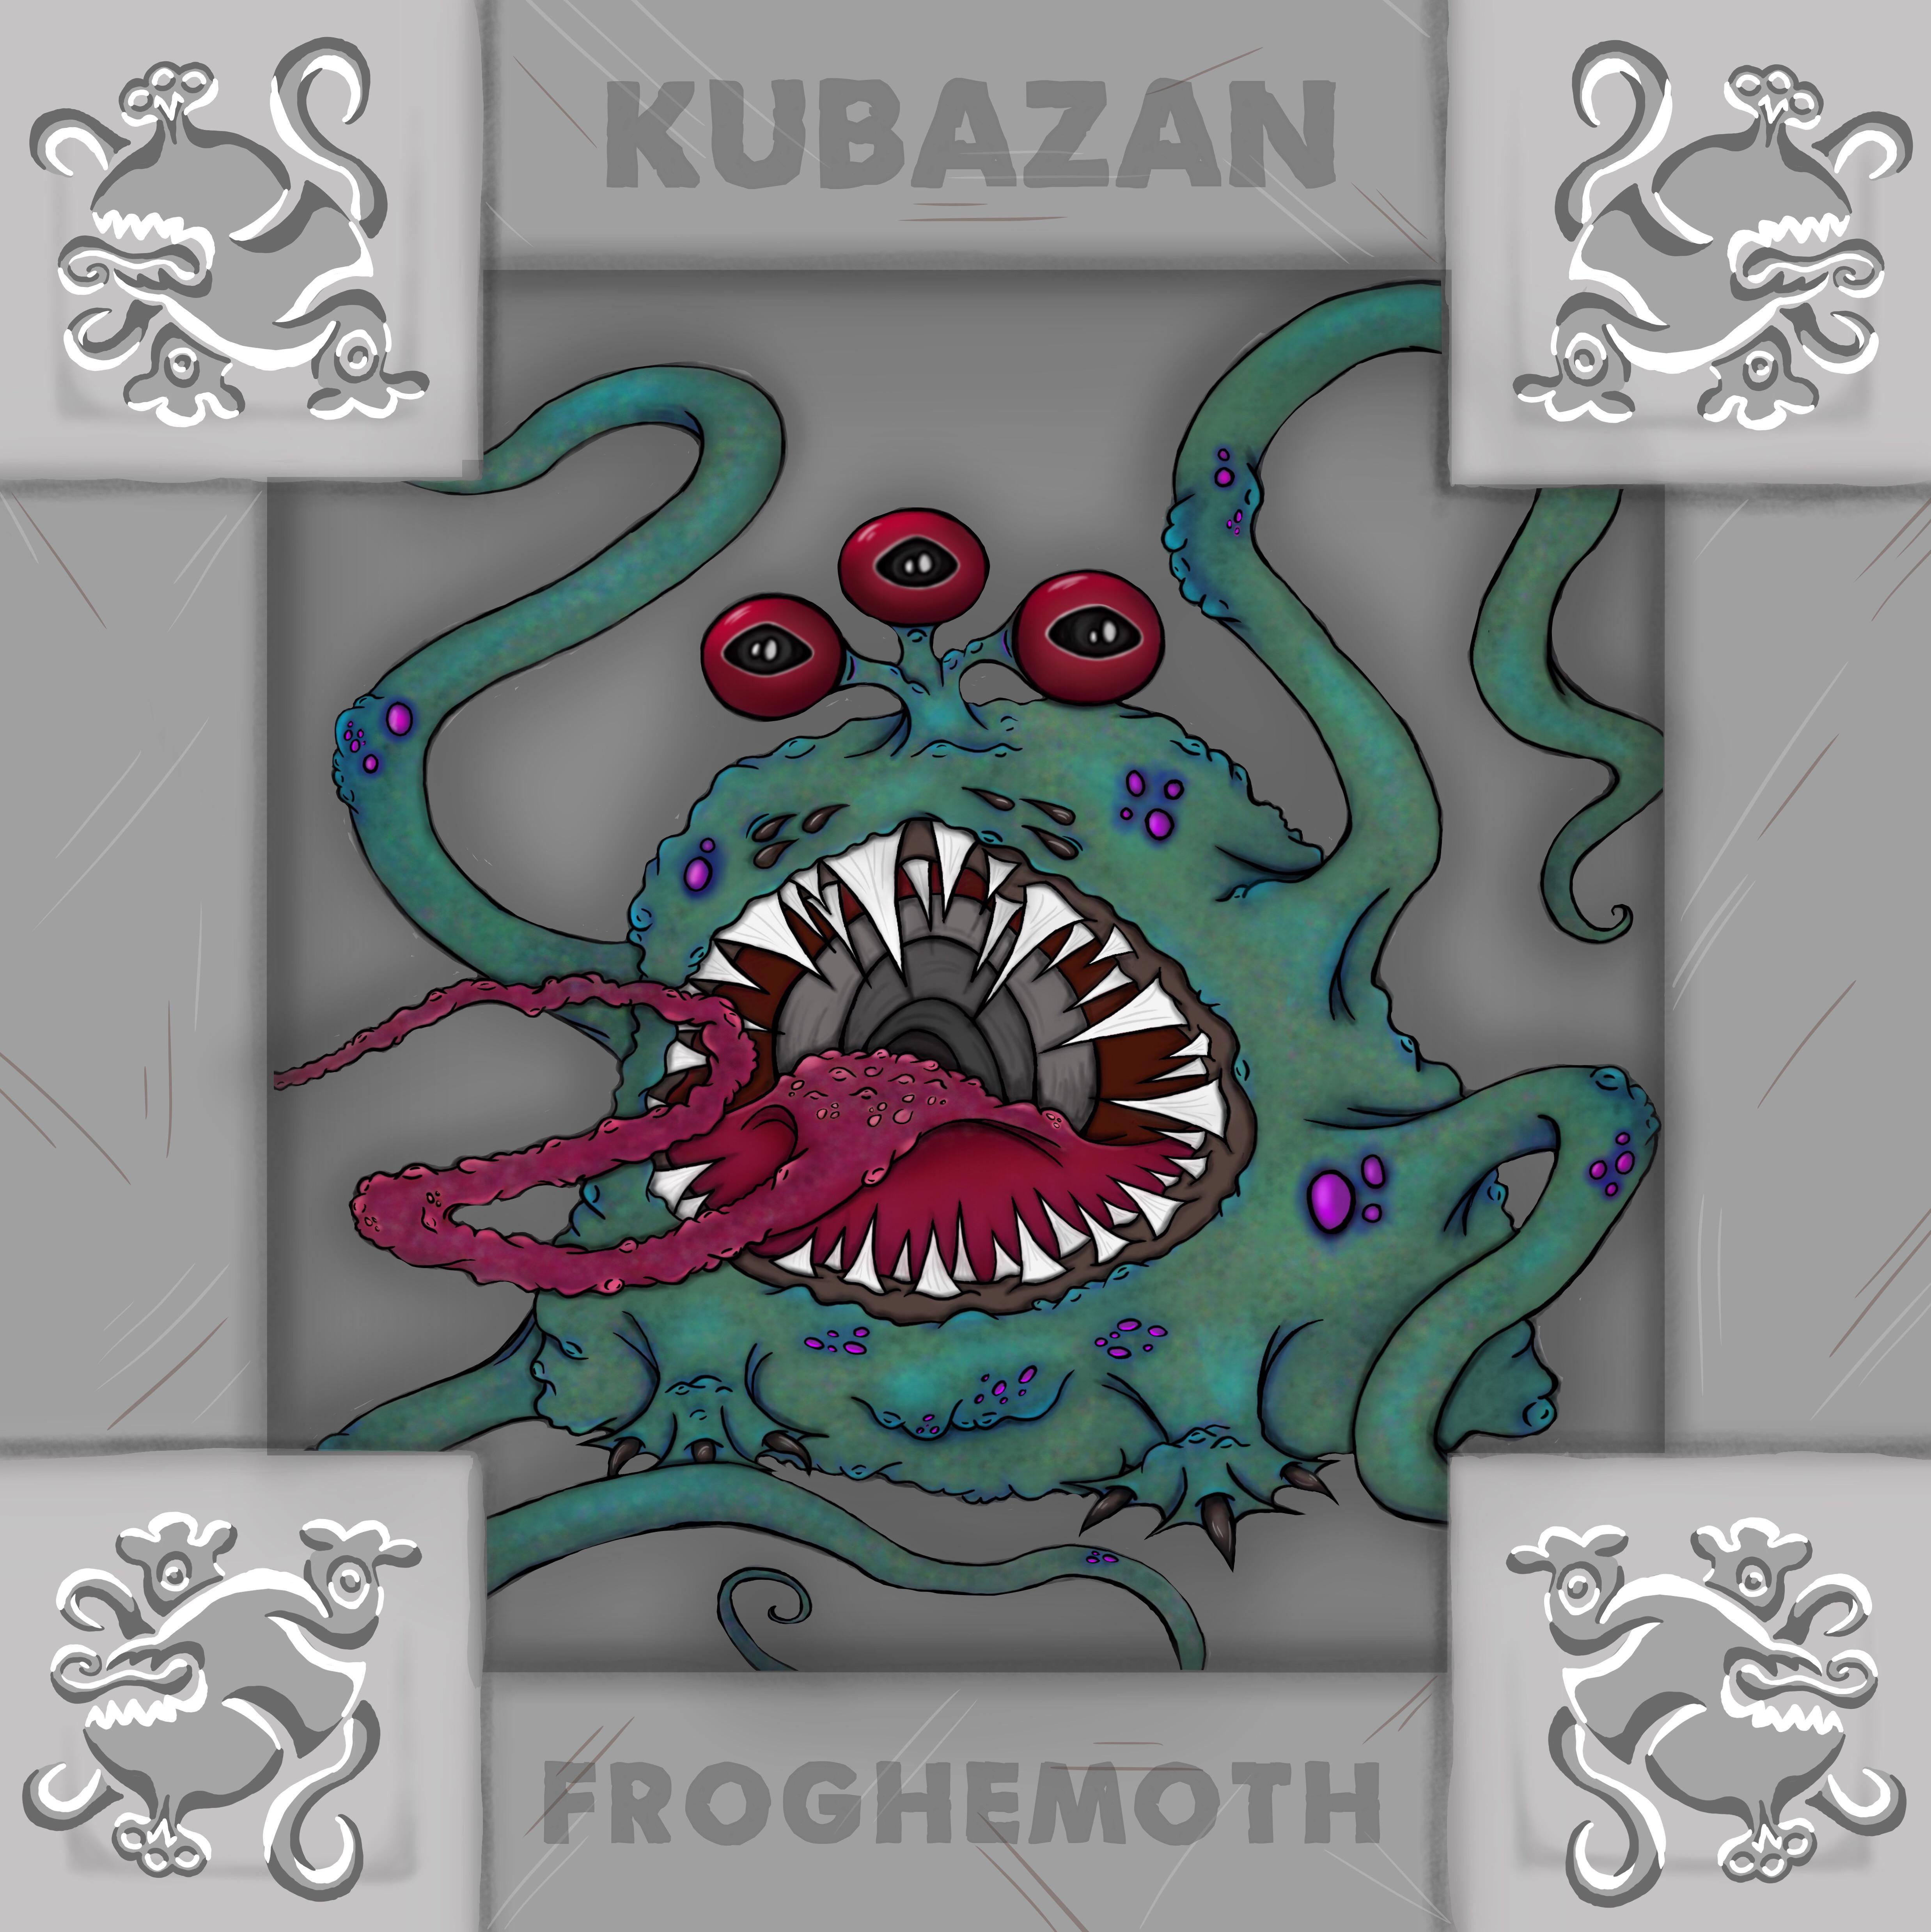 Kubazan (Froghemoth)